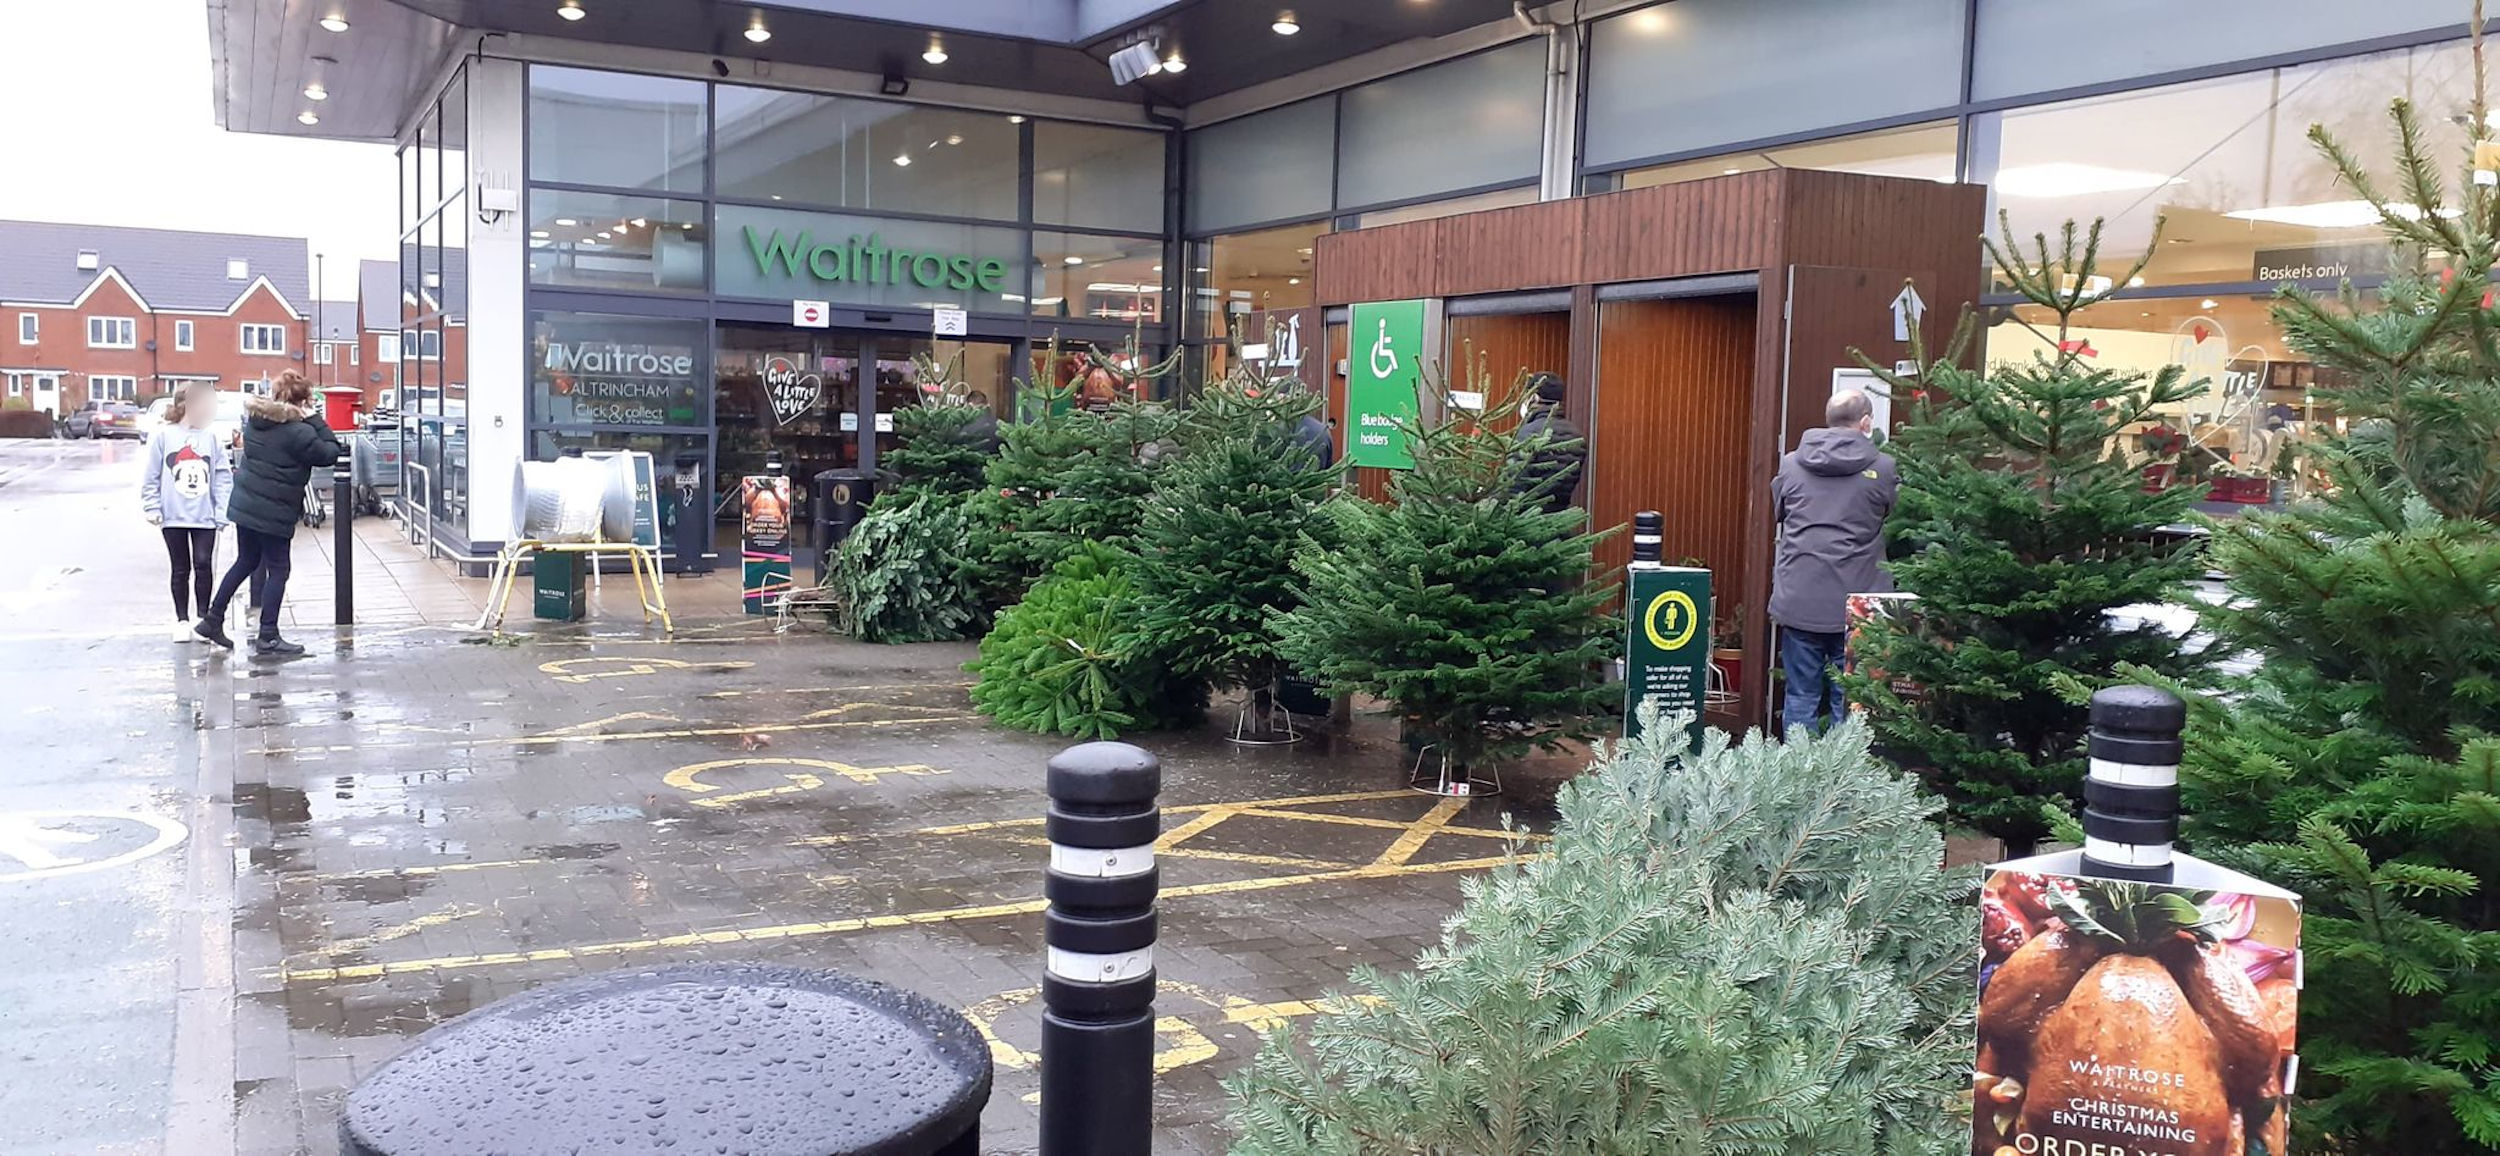 Christmas trees block disabled bays - Consumer News UK